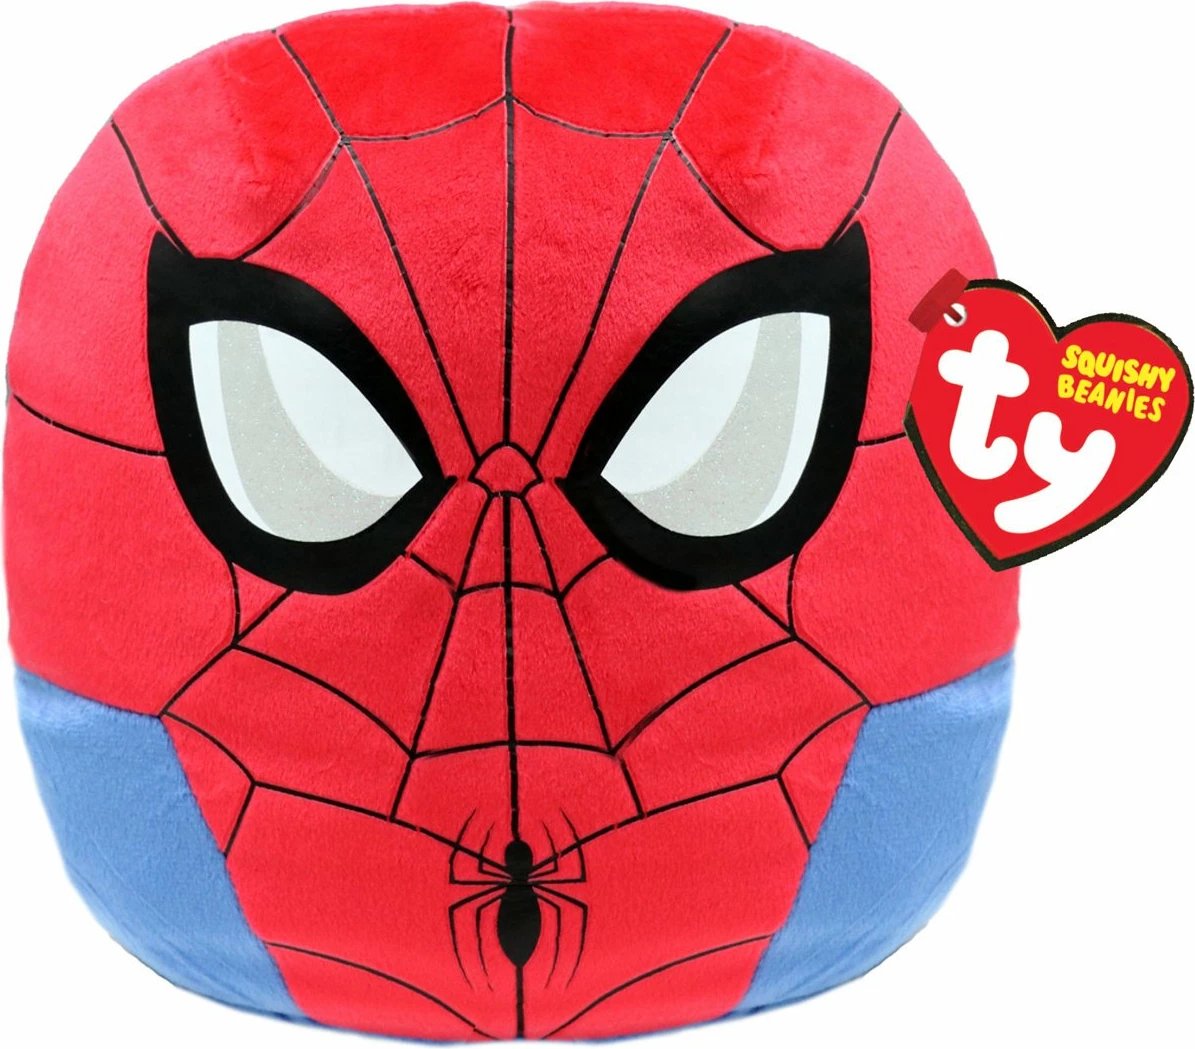 Ty Squishy Beanies - Spider-Man 25cm Soft Toy